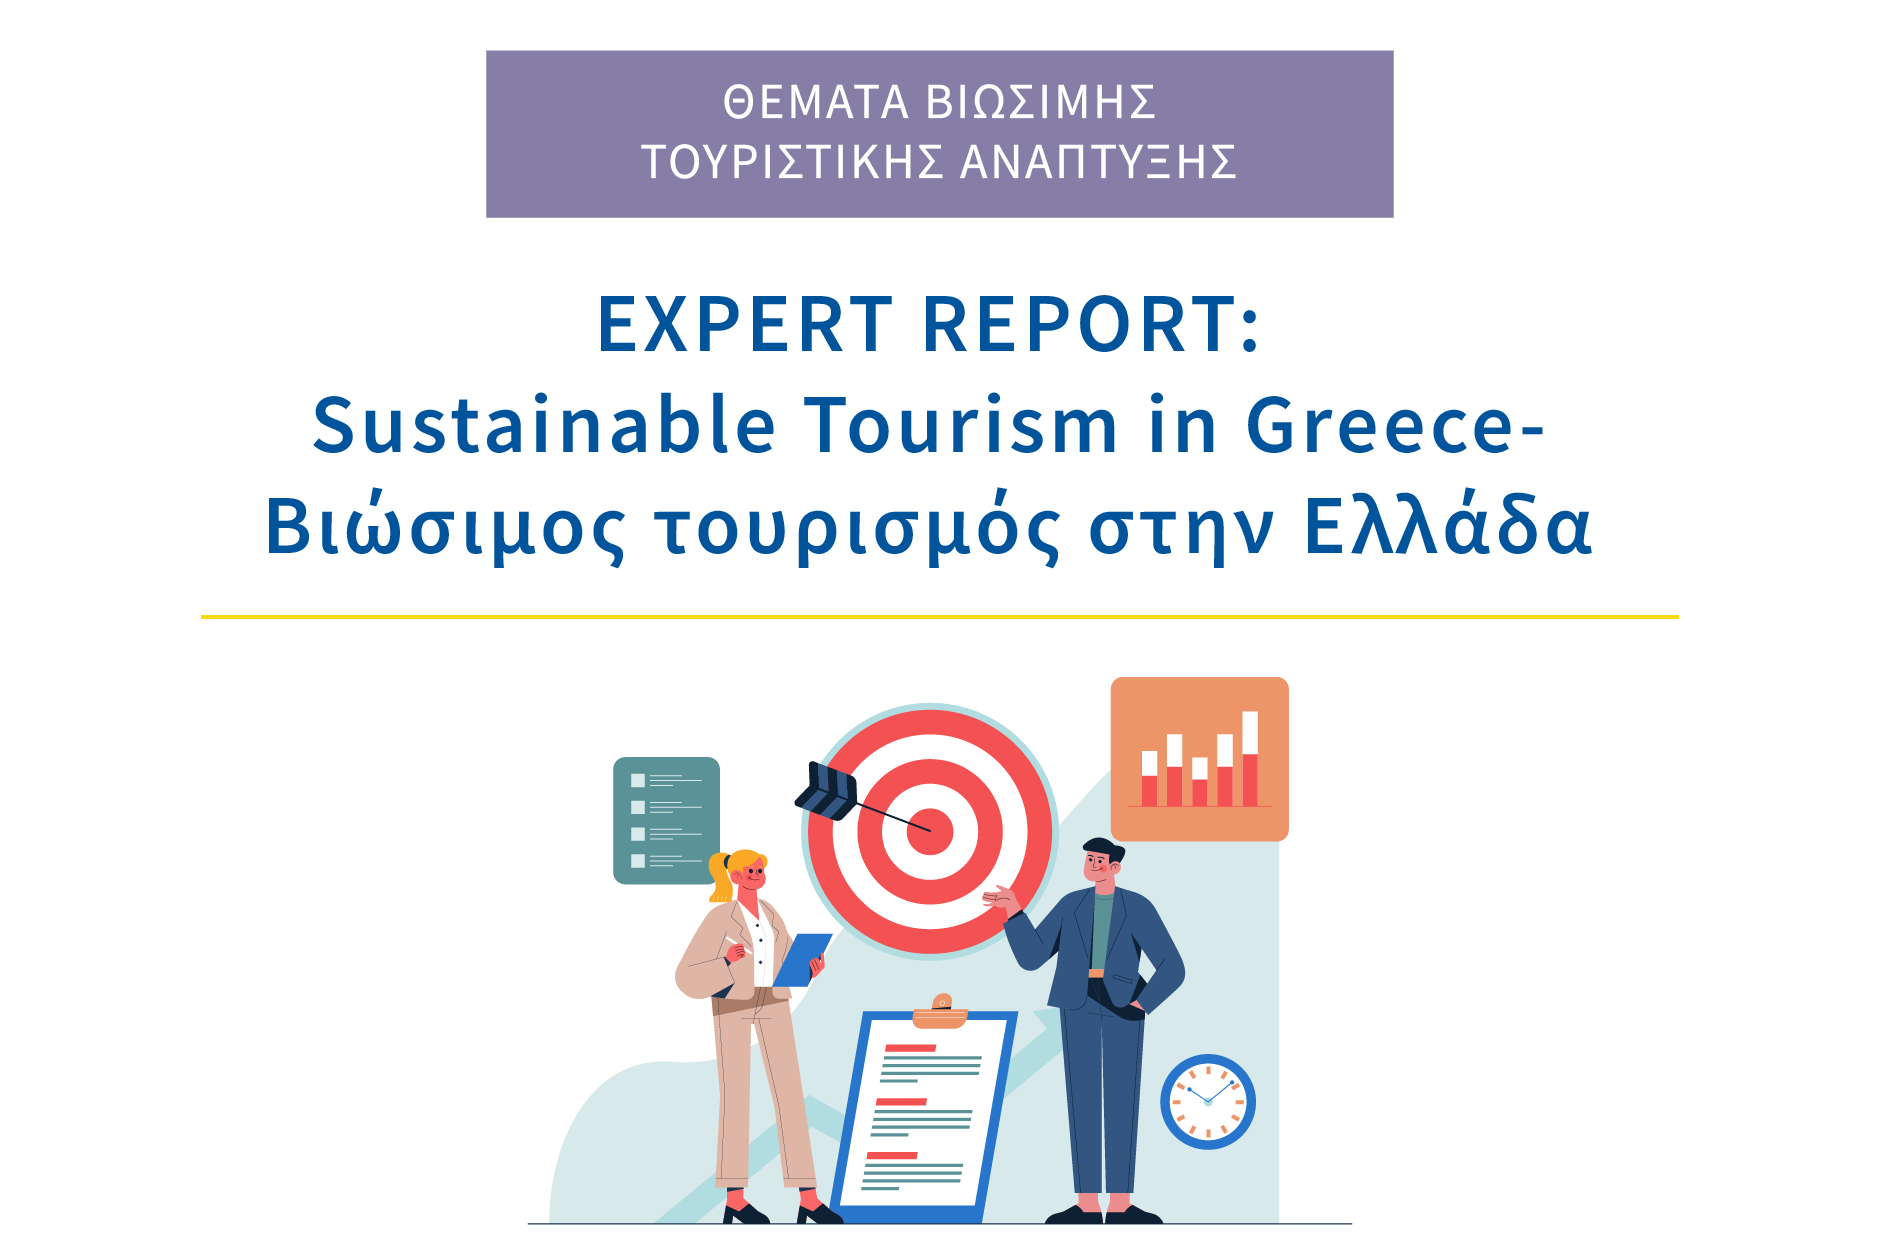 EXPERT REPORT: Sustainable Tourism in Greece- Βιώσιμος τουρισμός στην Ελλάδα